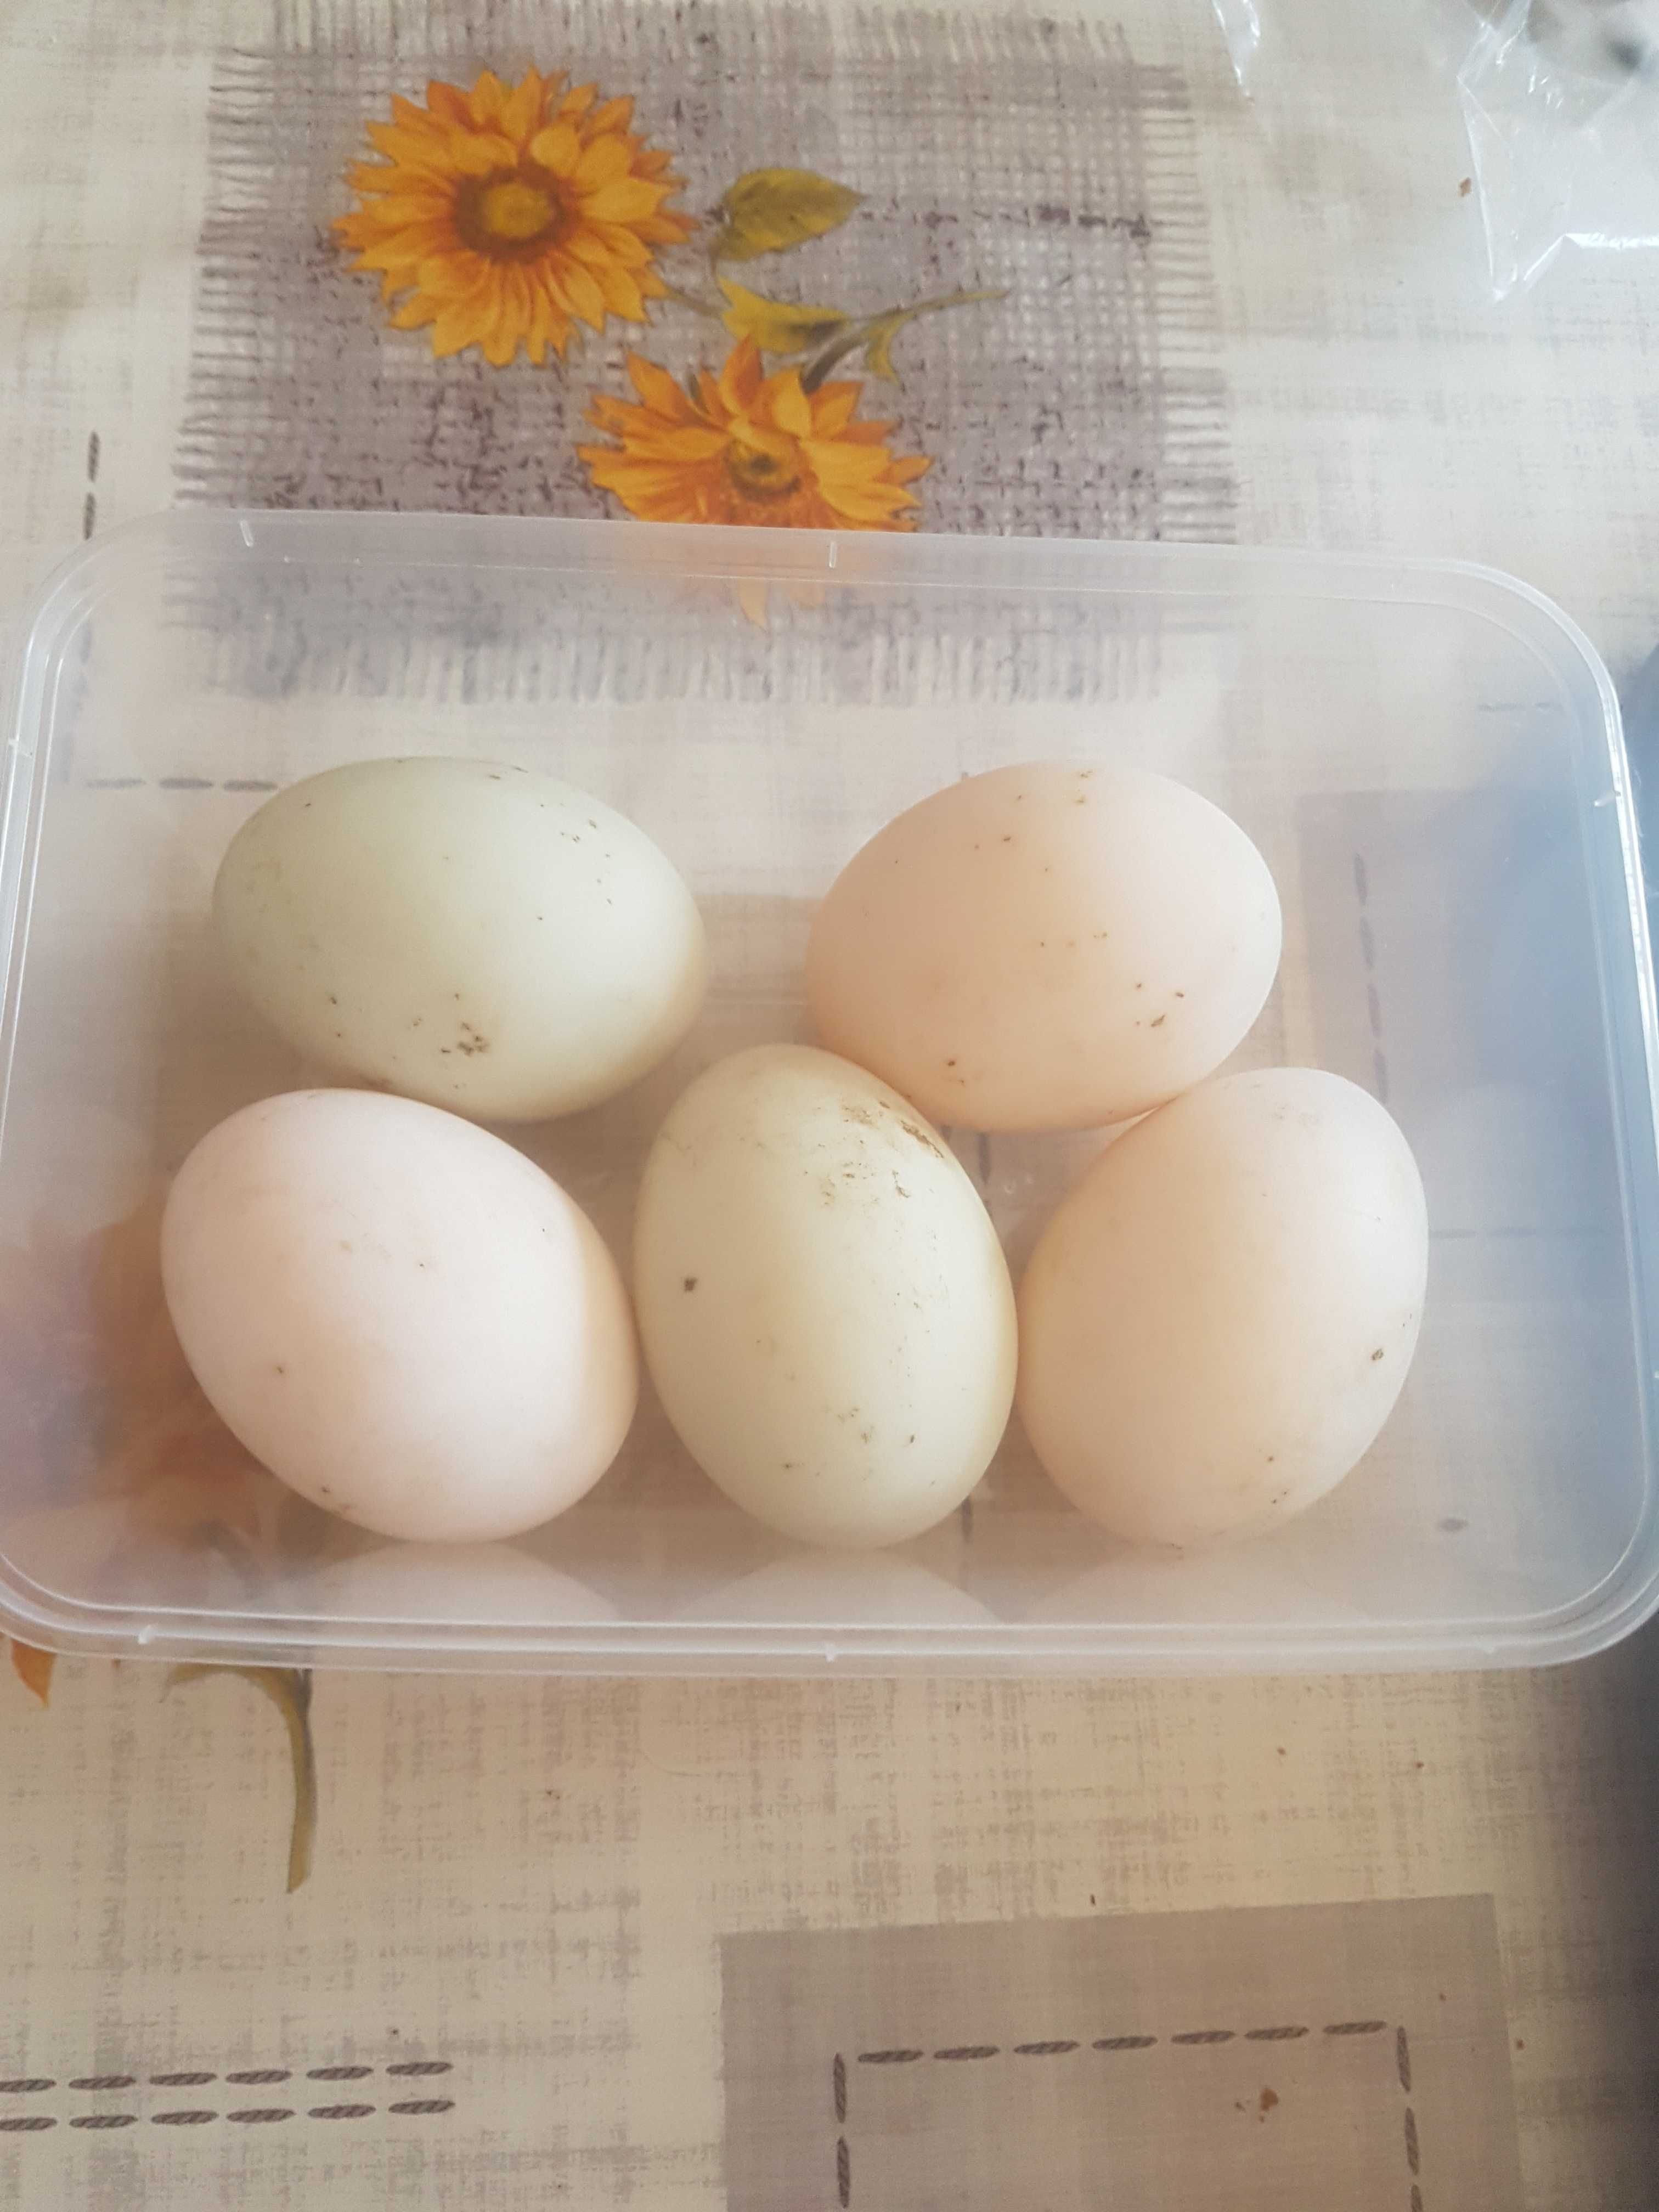 Oua rate indiene alergatoare - pt incubat